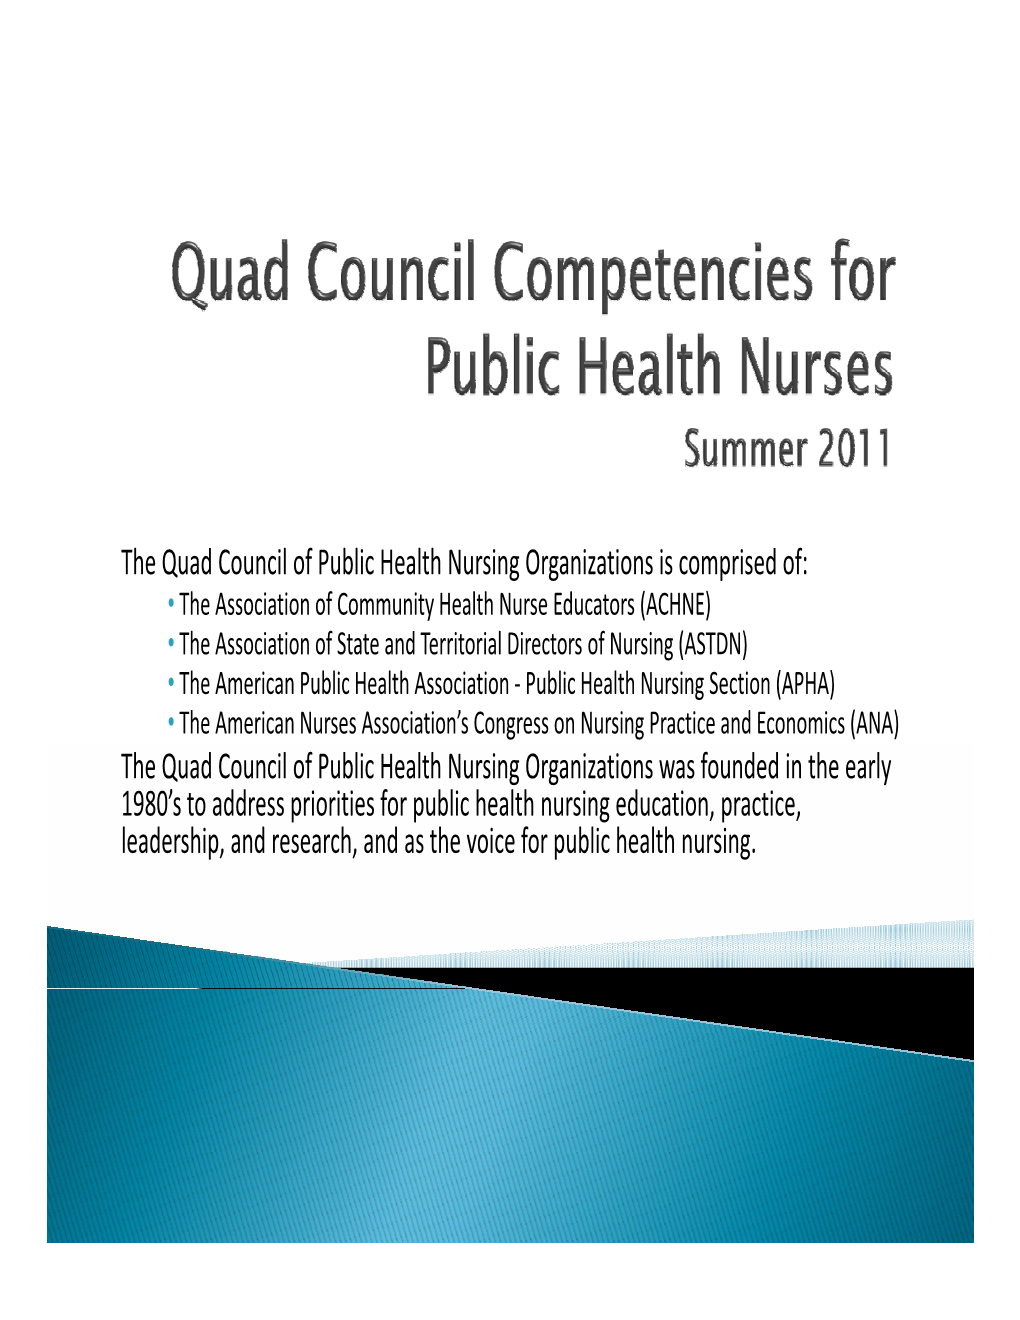 Q Ggp the Quad Council of Public Health Nursing Organ